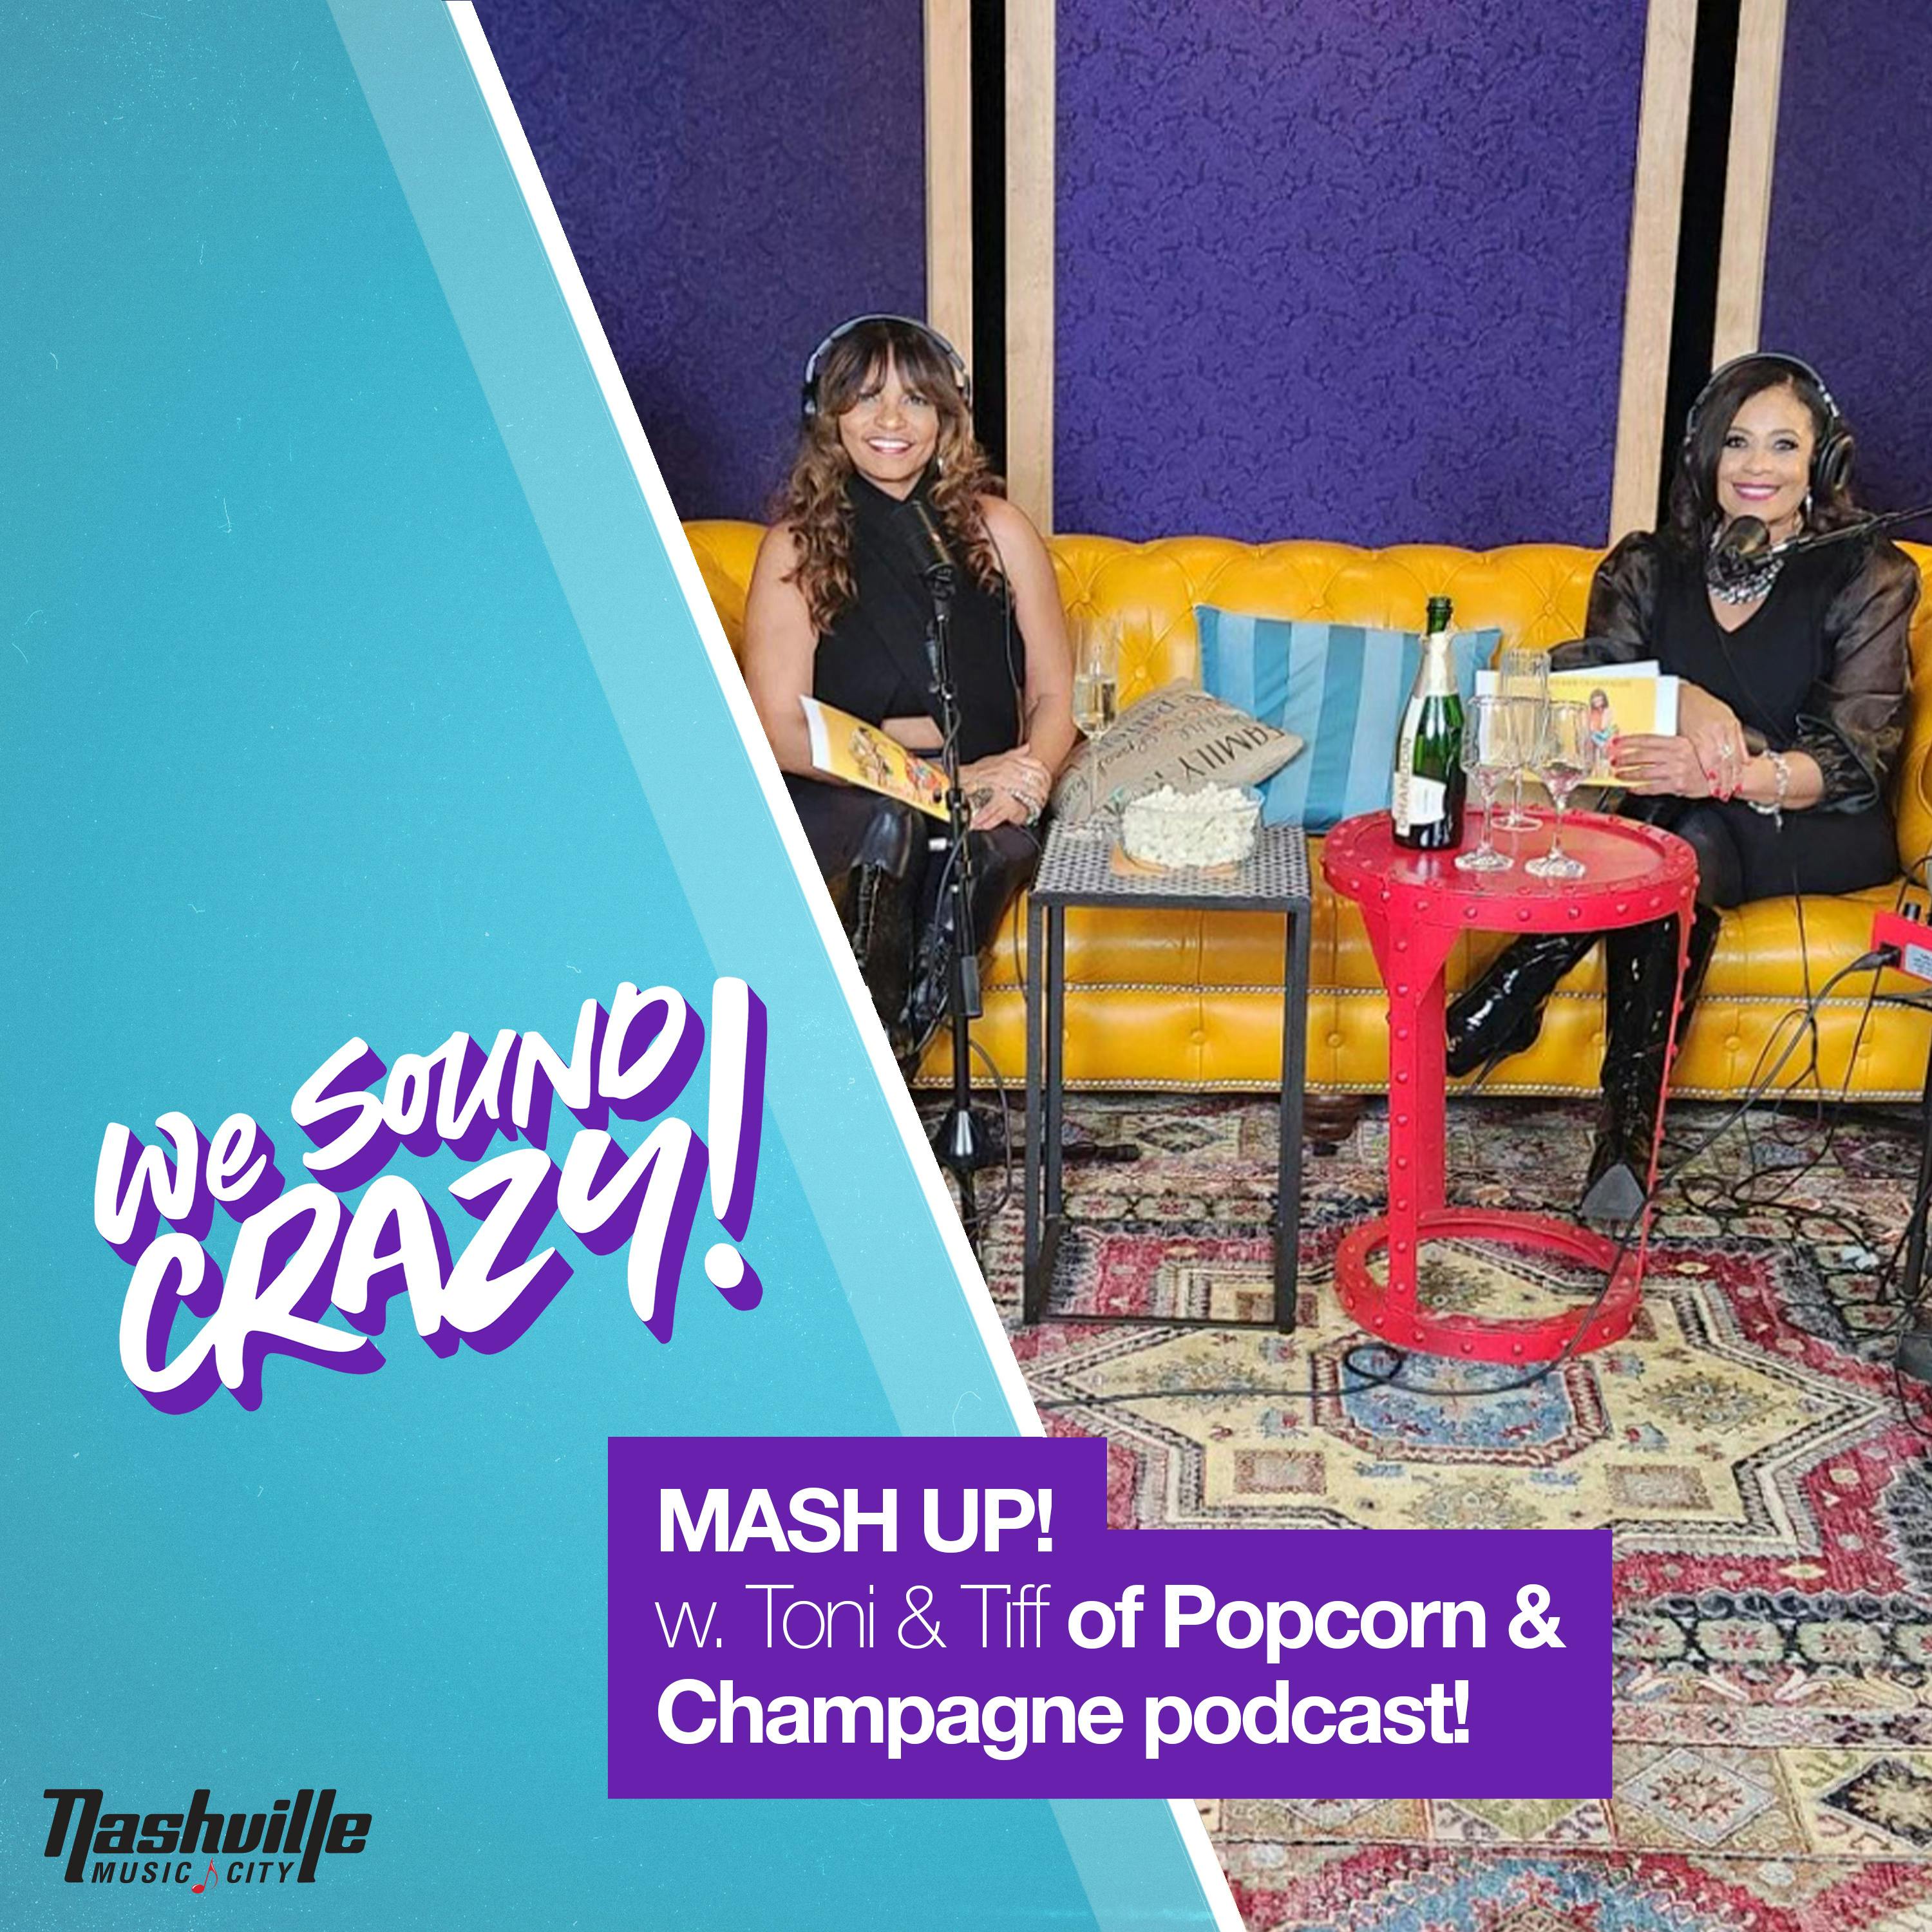 MASH UP! w. Toni & Tiff of Popcorn & Champagne podcast!